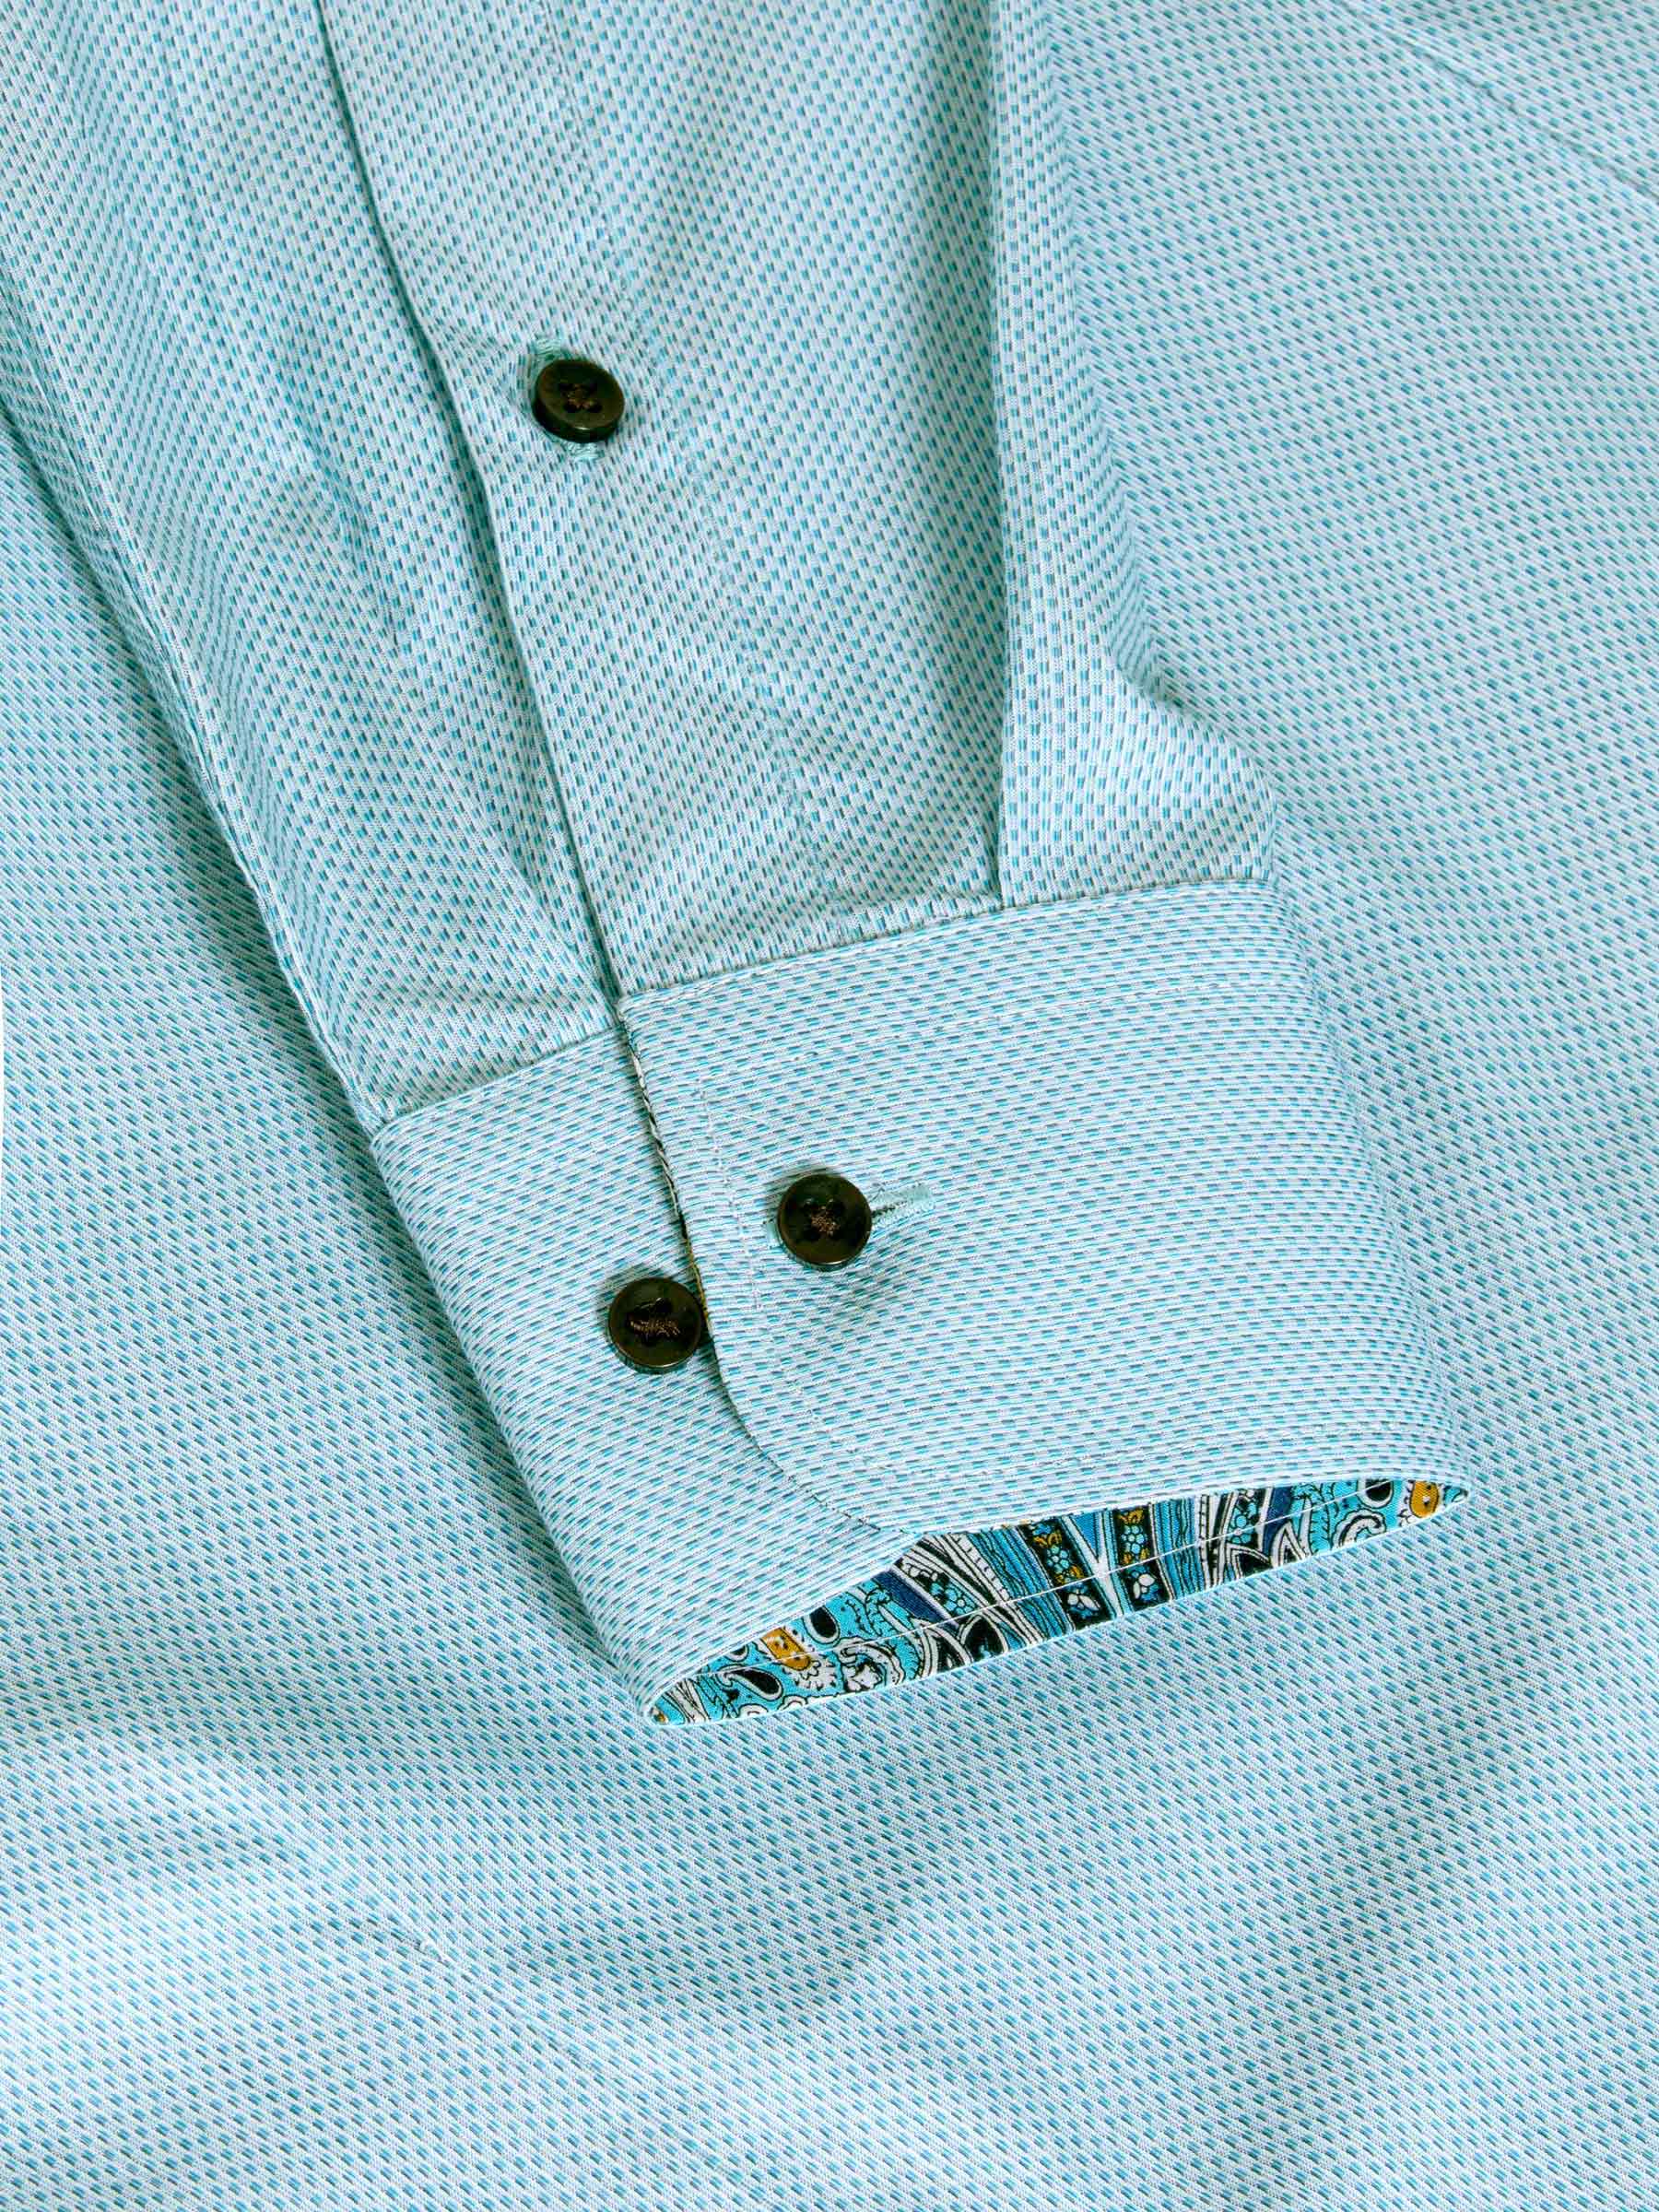 Shirt Long Sleeve 75694 Murial Turquoise